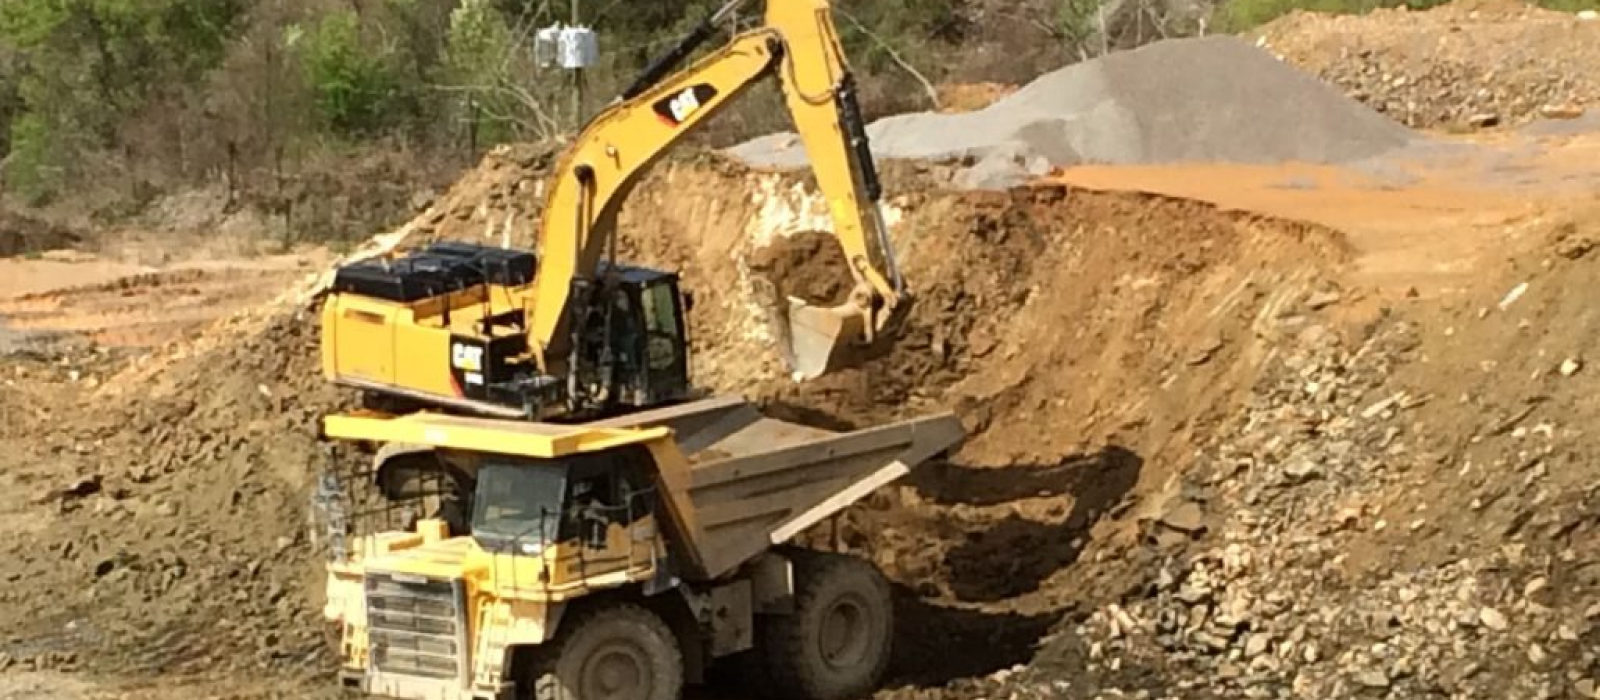 Heavy Equipment Moving Dirt For Site Prep At The Martin Marietta Augusta Quarry